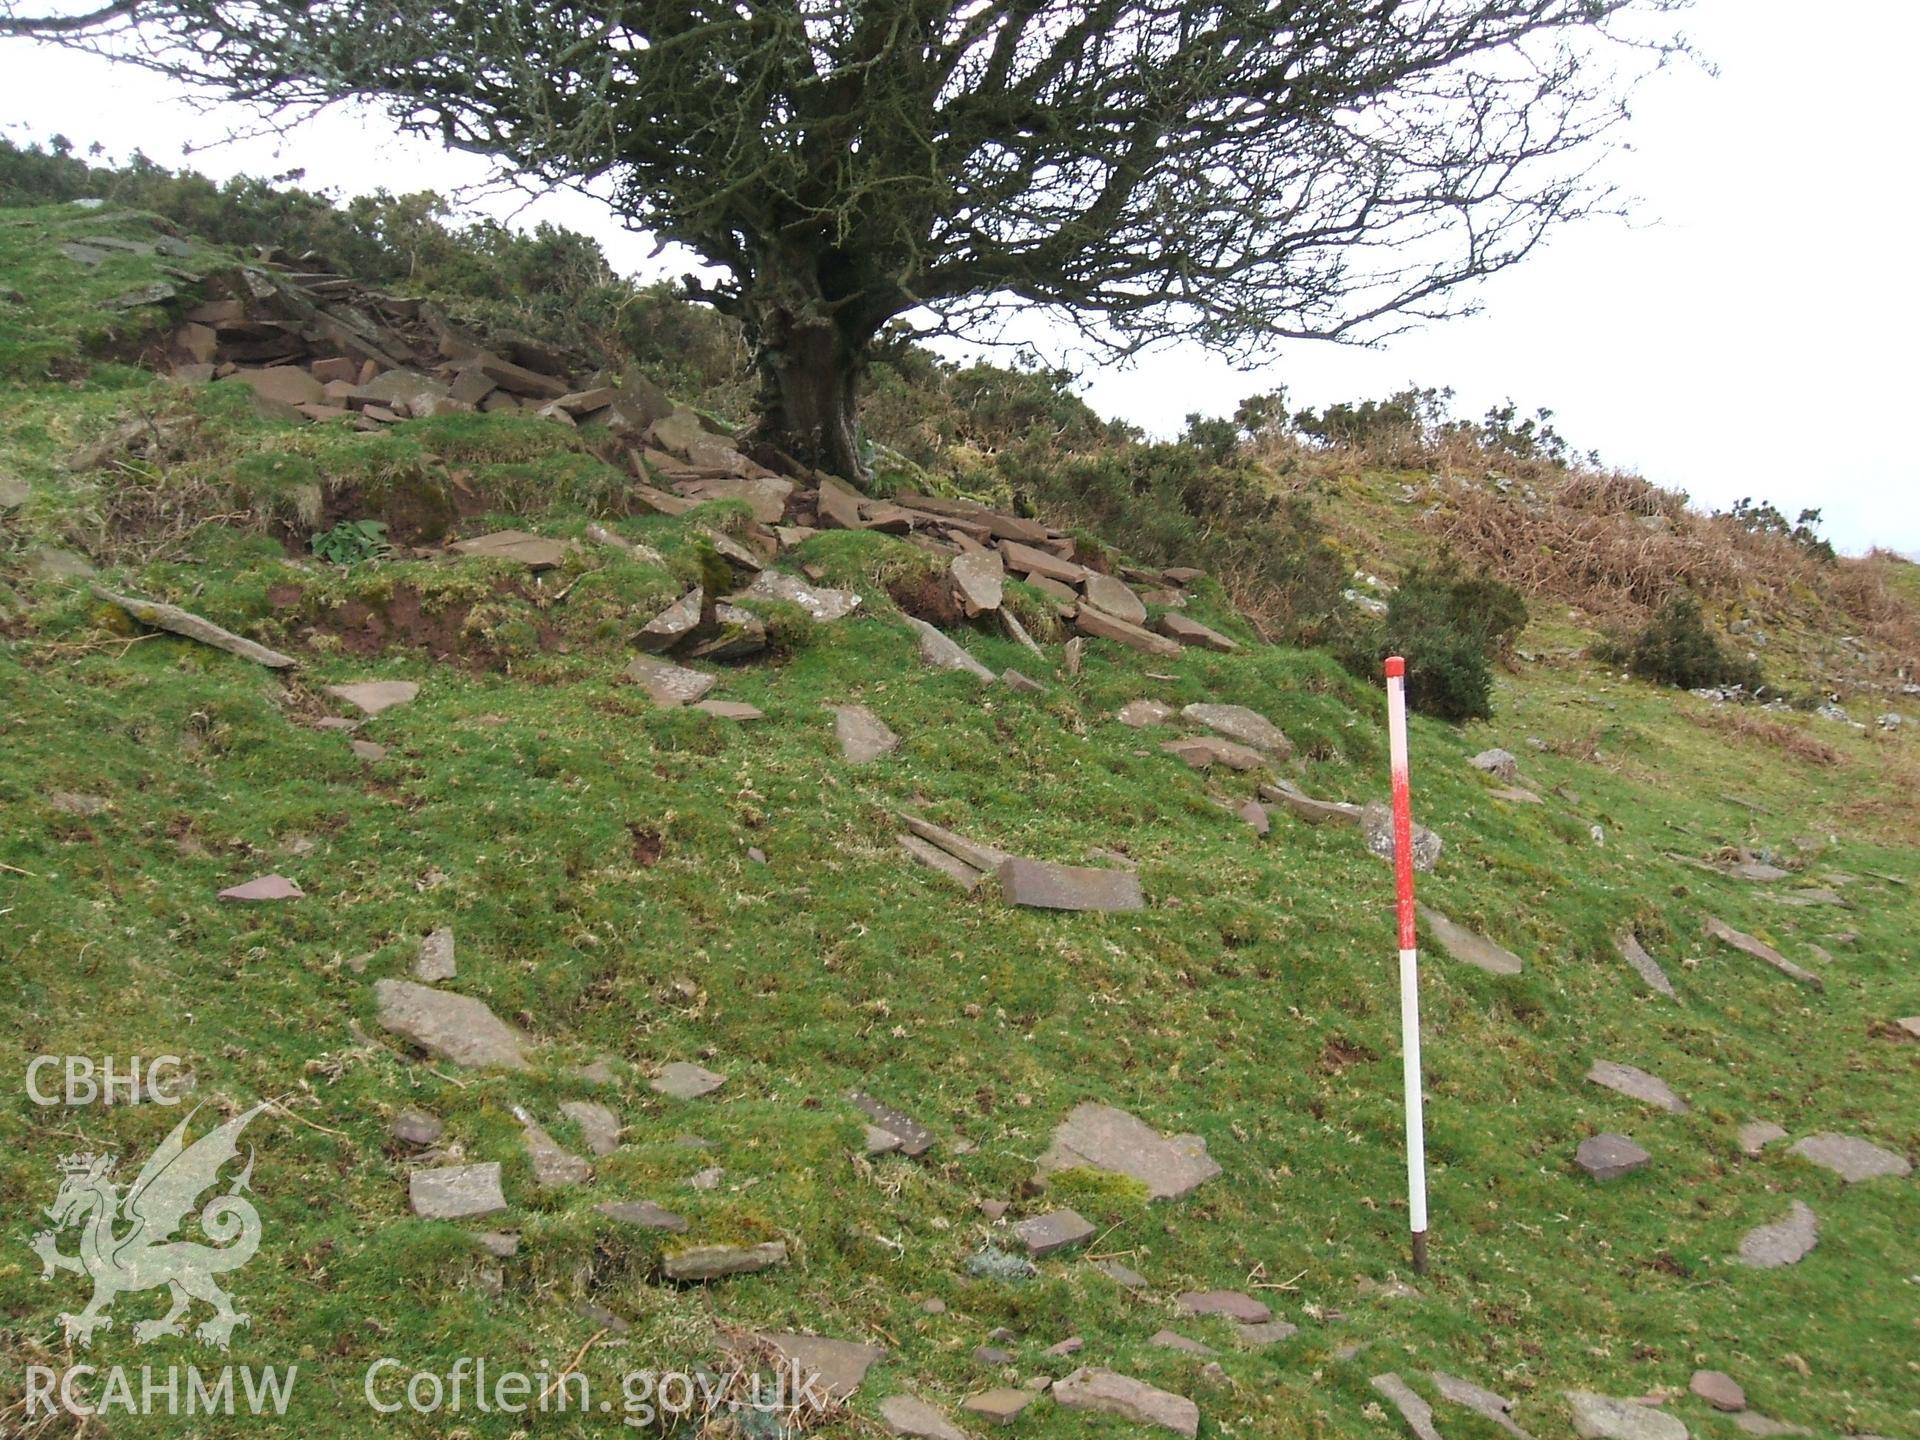 Digital colour photograph of a limestone quarry at Carreg Wen Fawr y Rugos IV taken on 04/03/2009 by B. Britton during the Mynydd Llangynidr Upland Survey undertaken by ArchaeoPhysica.